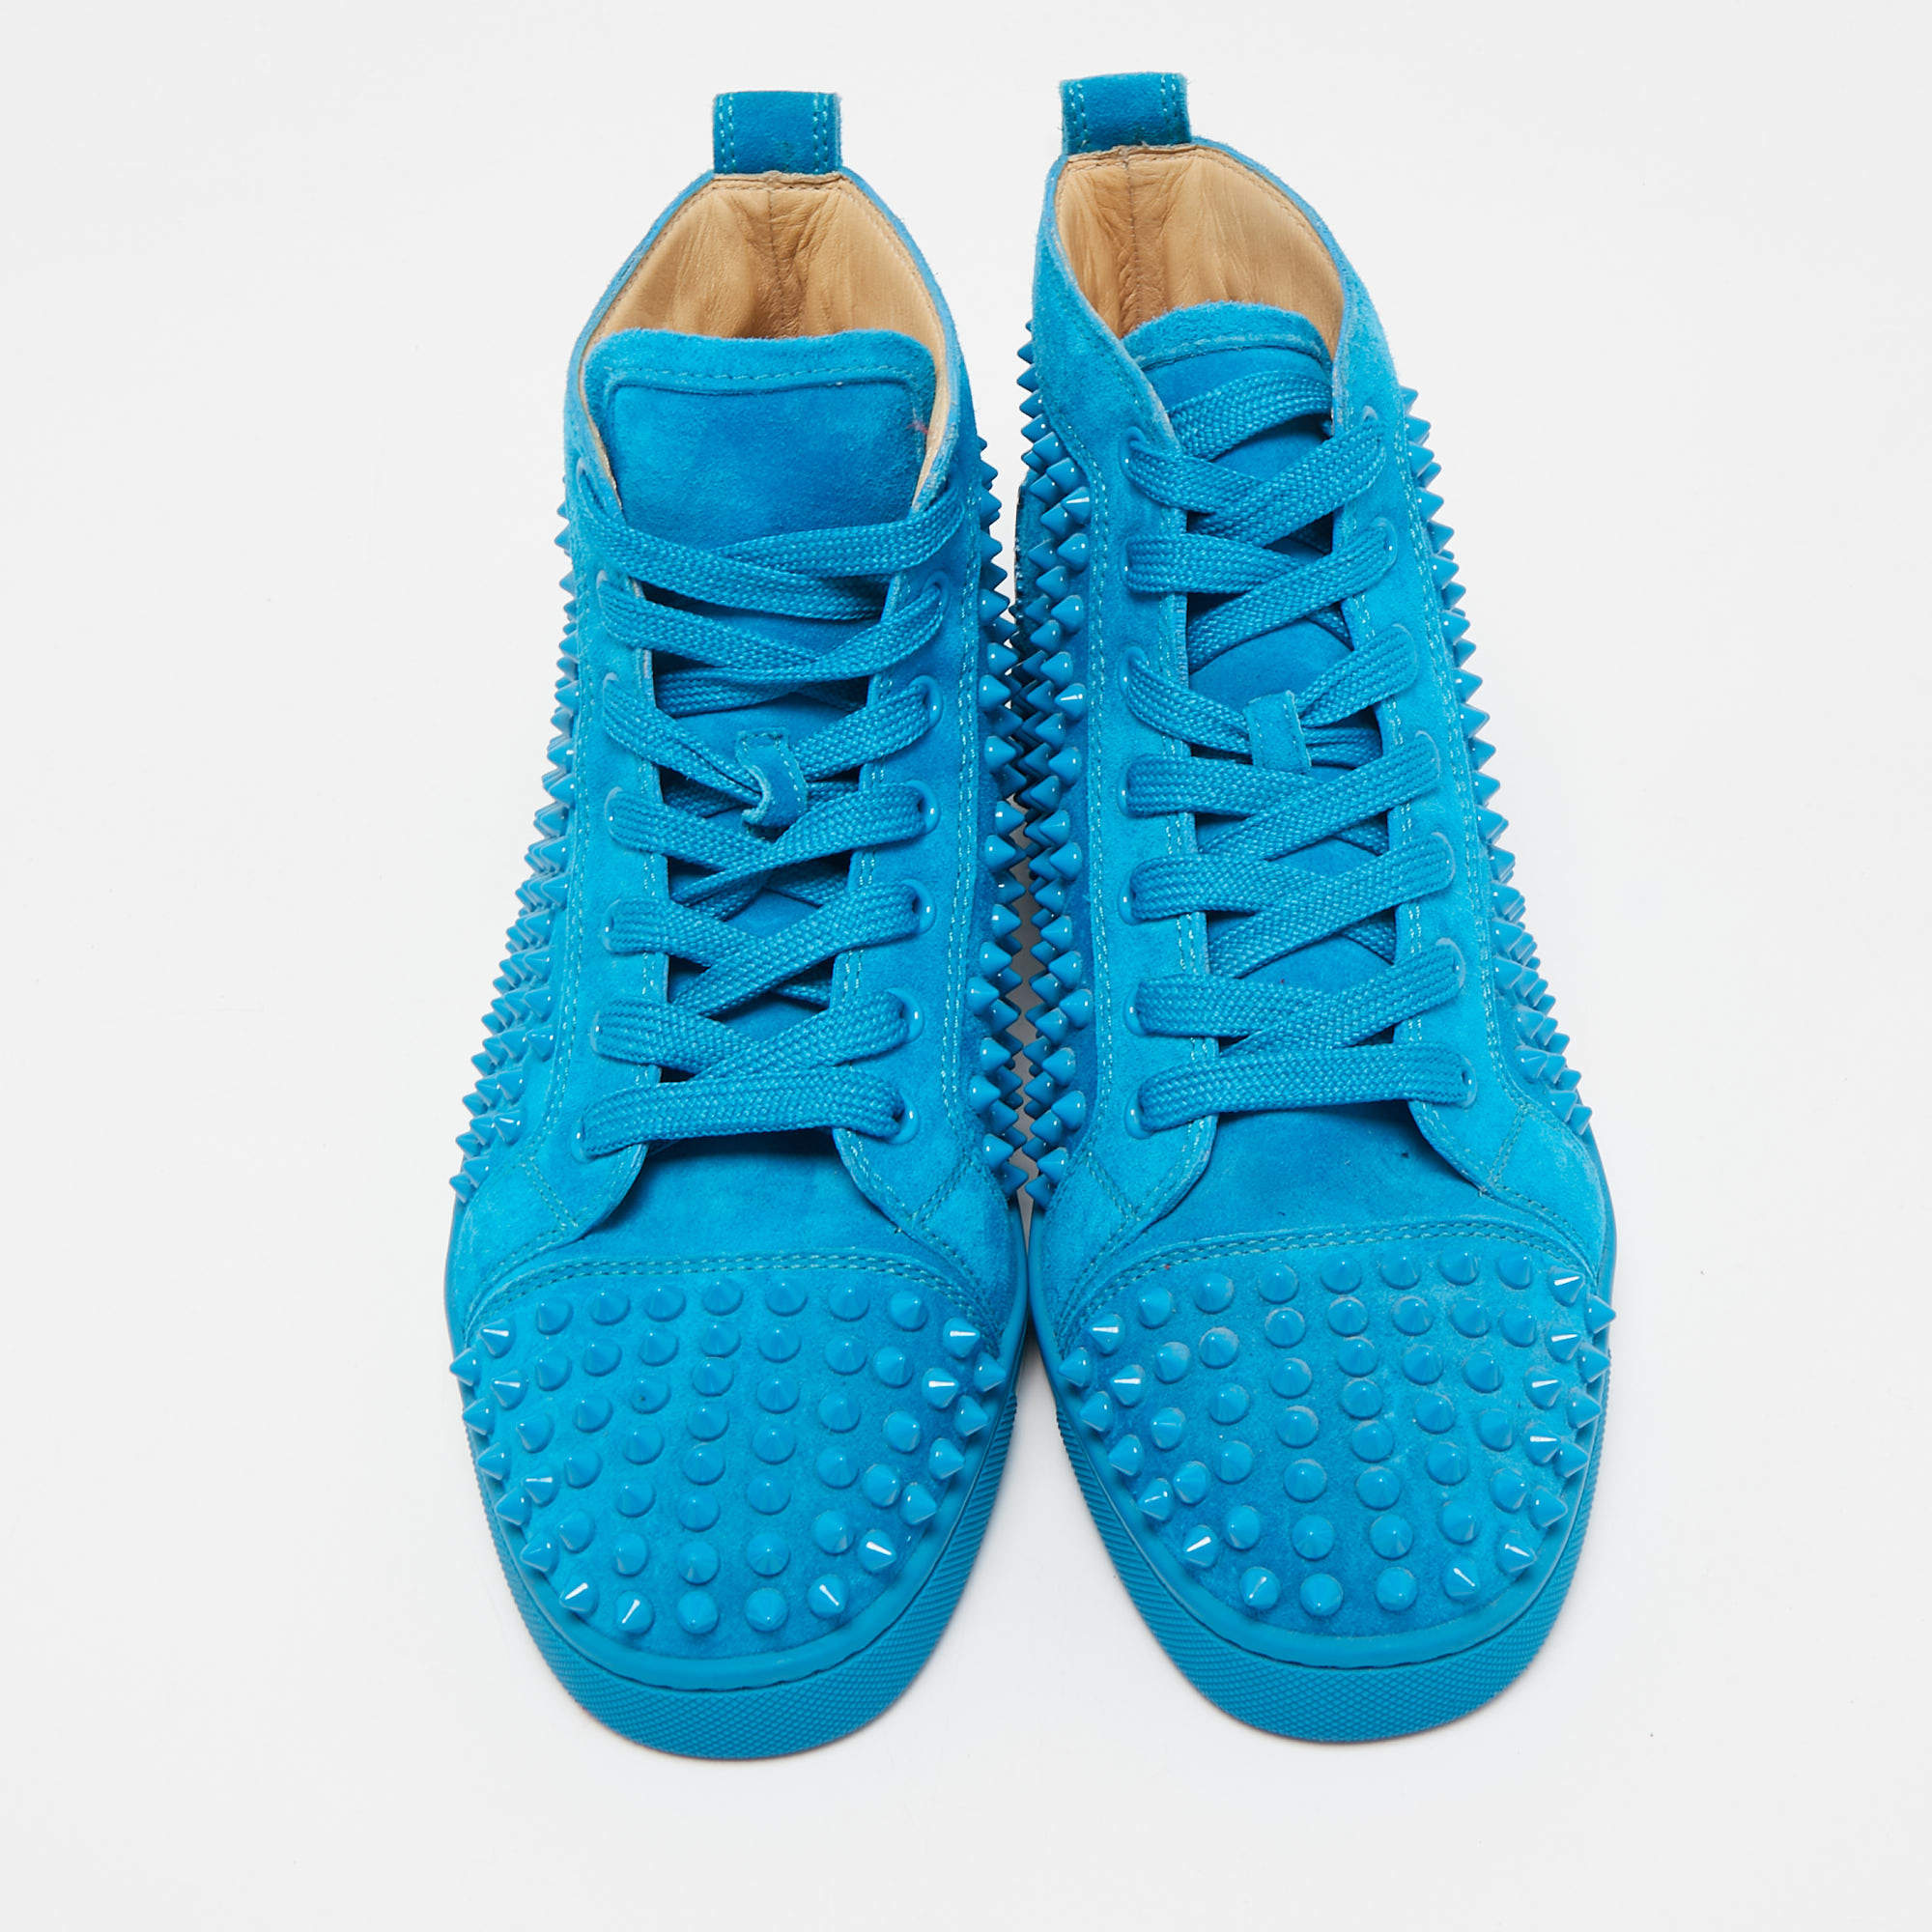 Quality G5🔥 Louis Vuitton / Christian Louboutin Sneakers